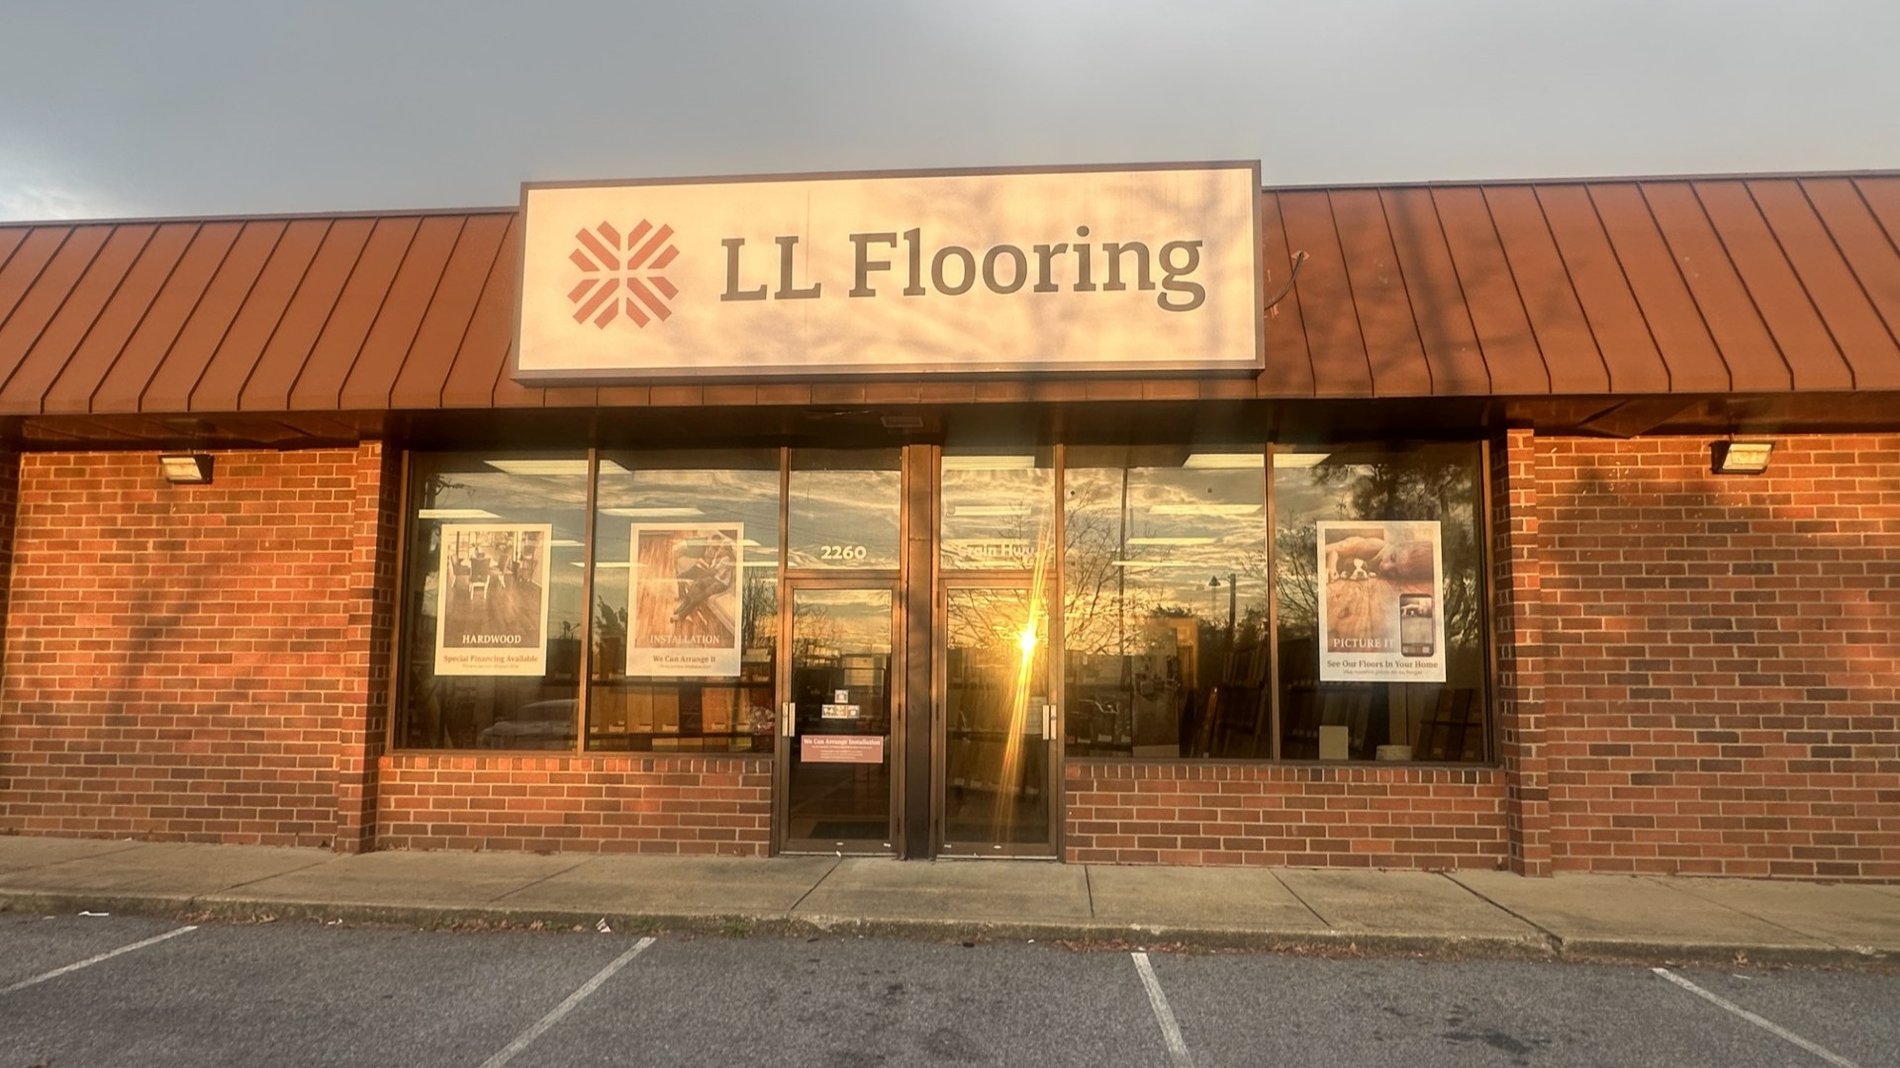 LL Flooring #1315 Waldorf | 2260 Crain Highway | Storefront